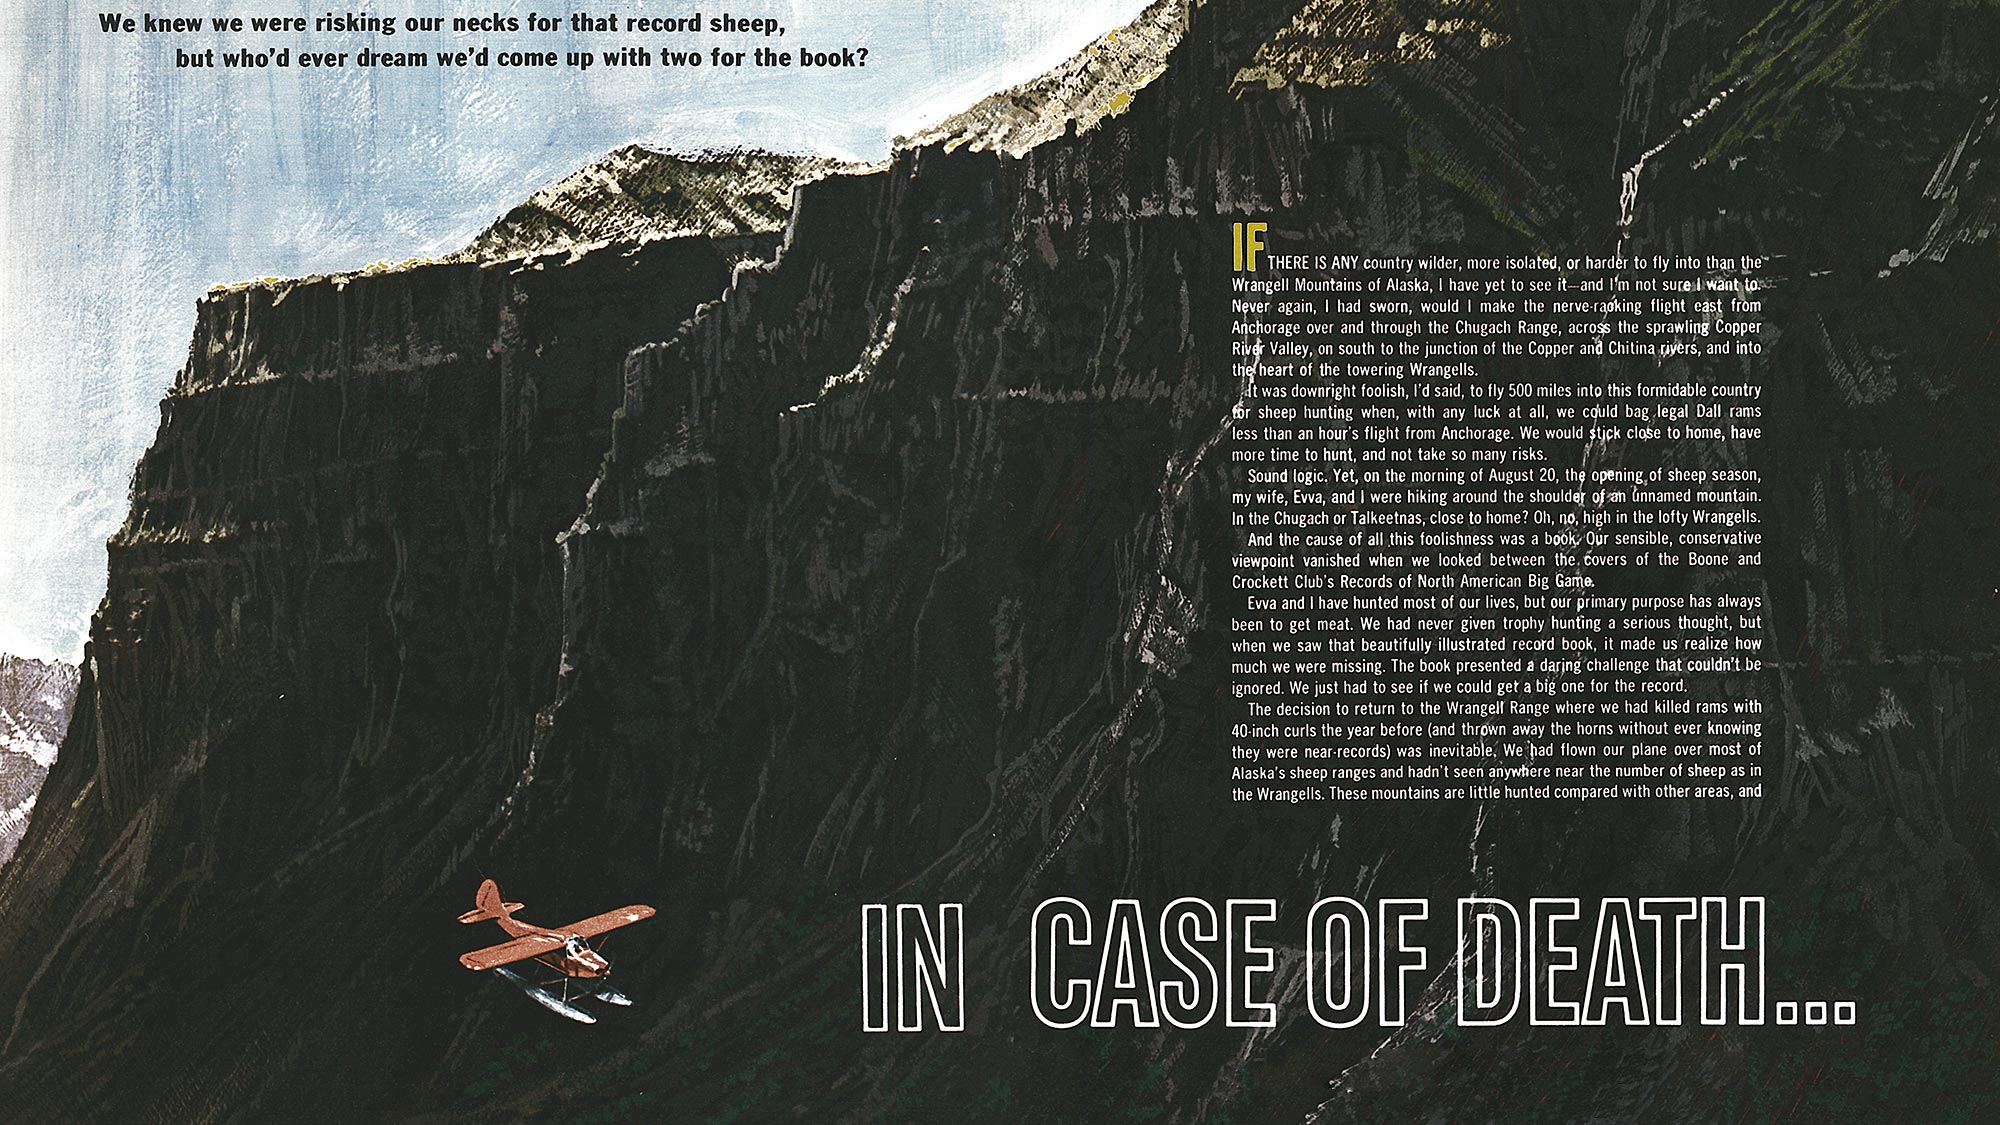 floatplane flies past big mountains on old magazine spread illustration